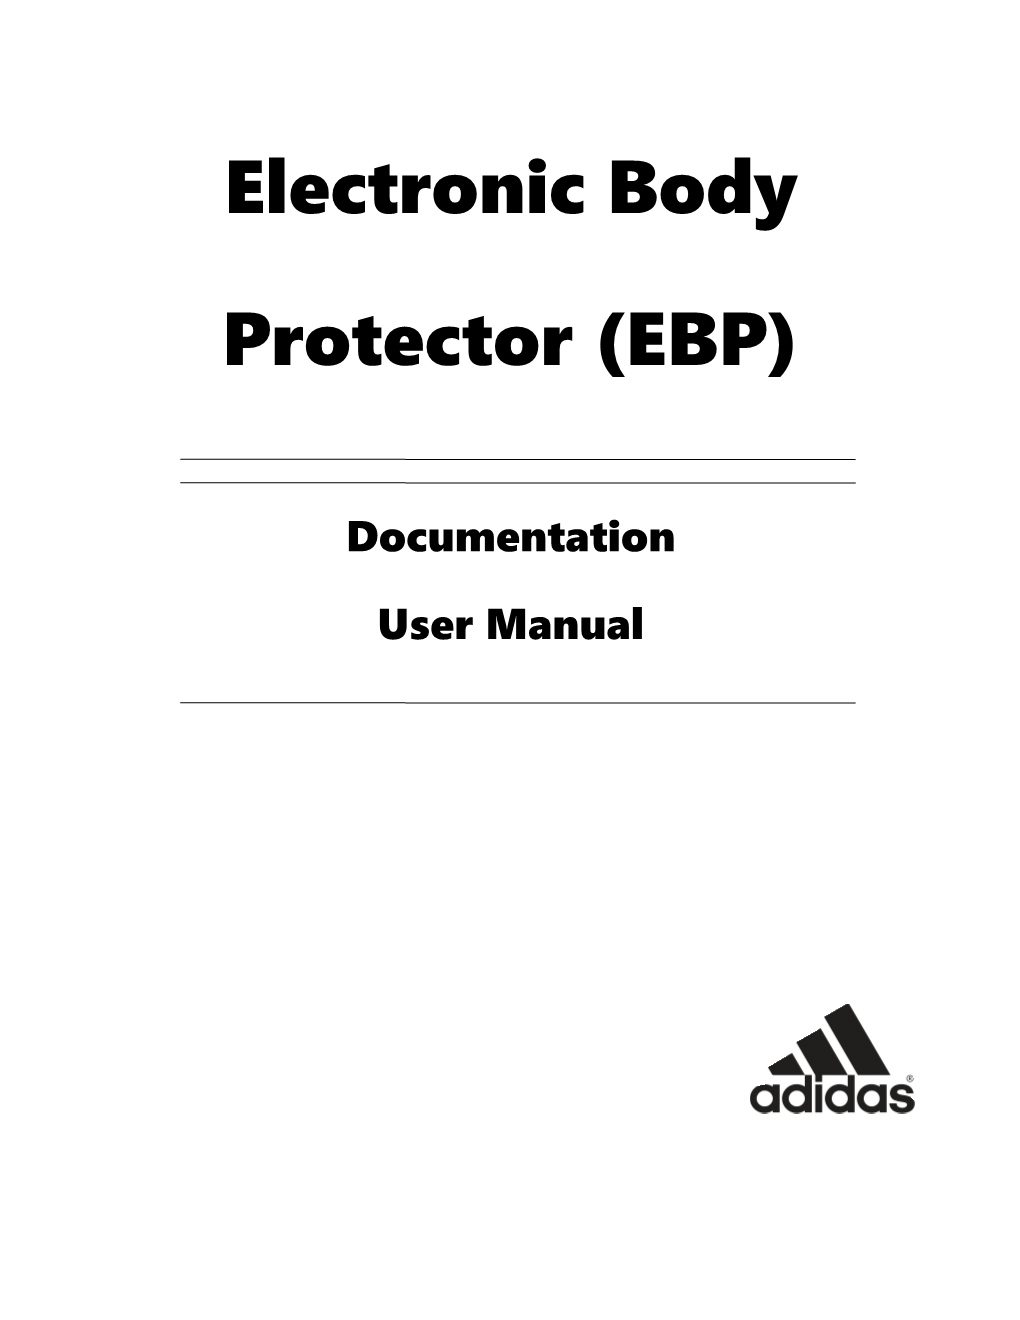 Electronic Body Protector (EBP)